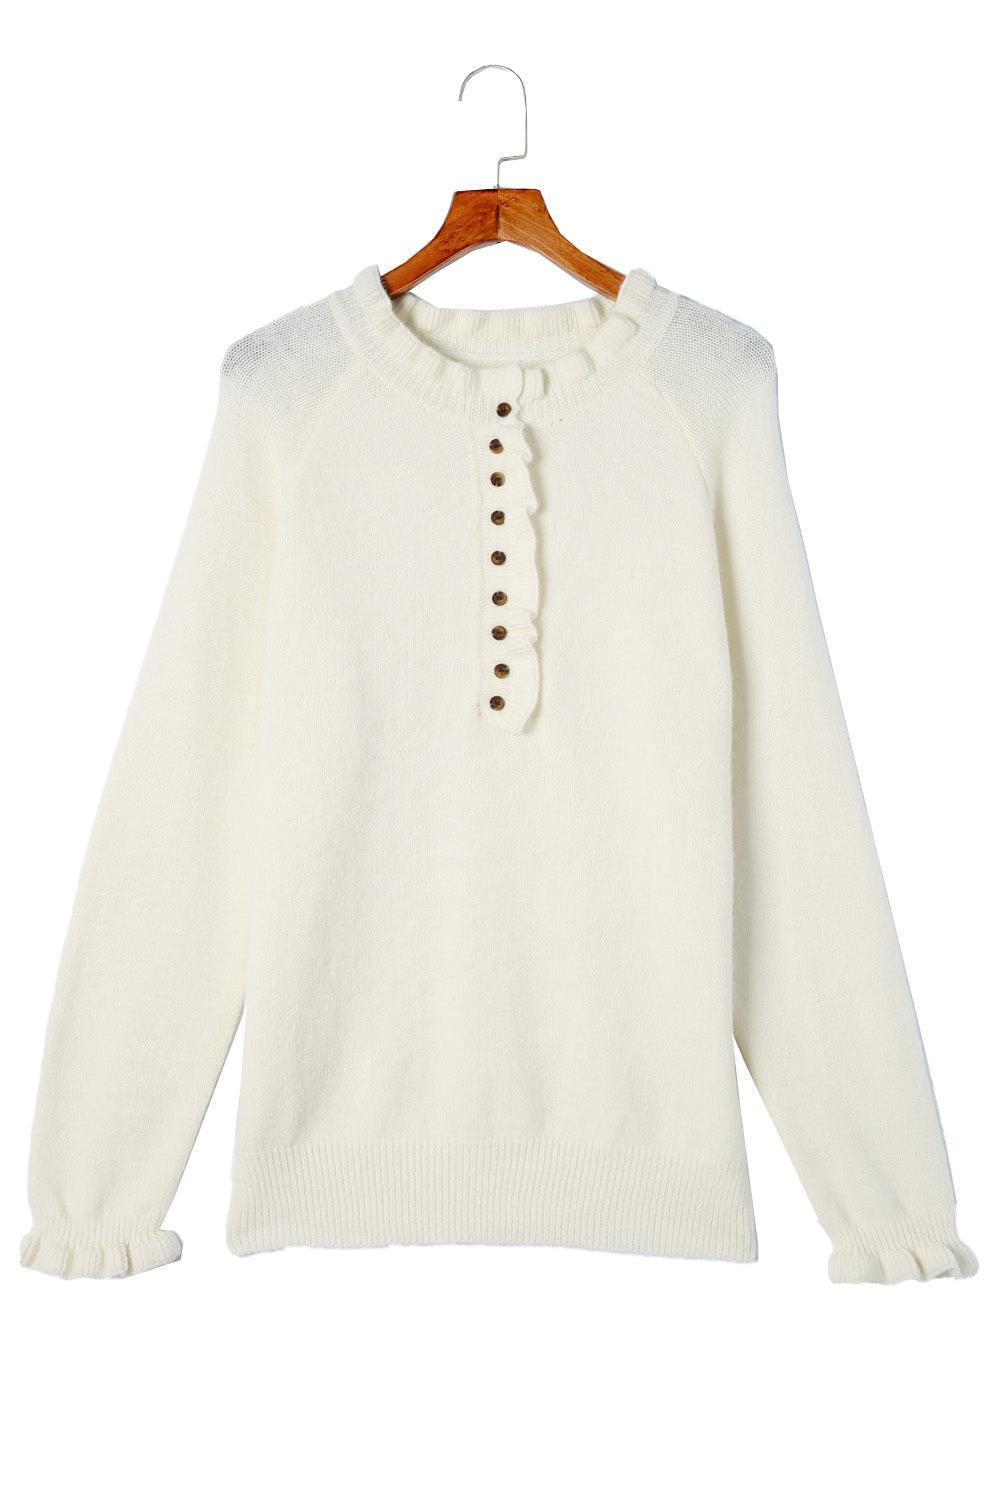 Beige Frill Trim Button Casual Knit Pullover Sweater - Ninonine